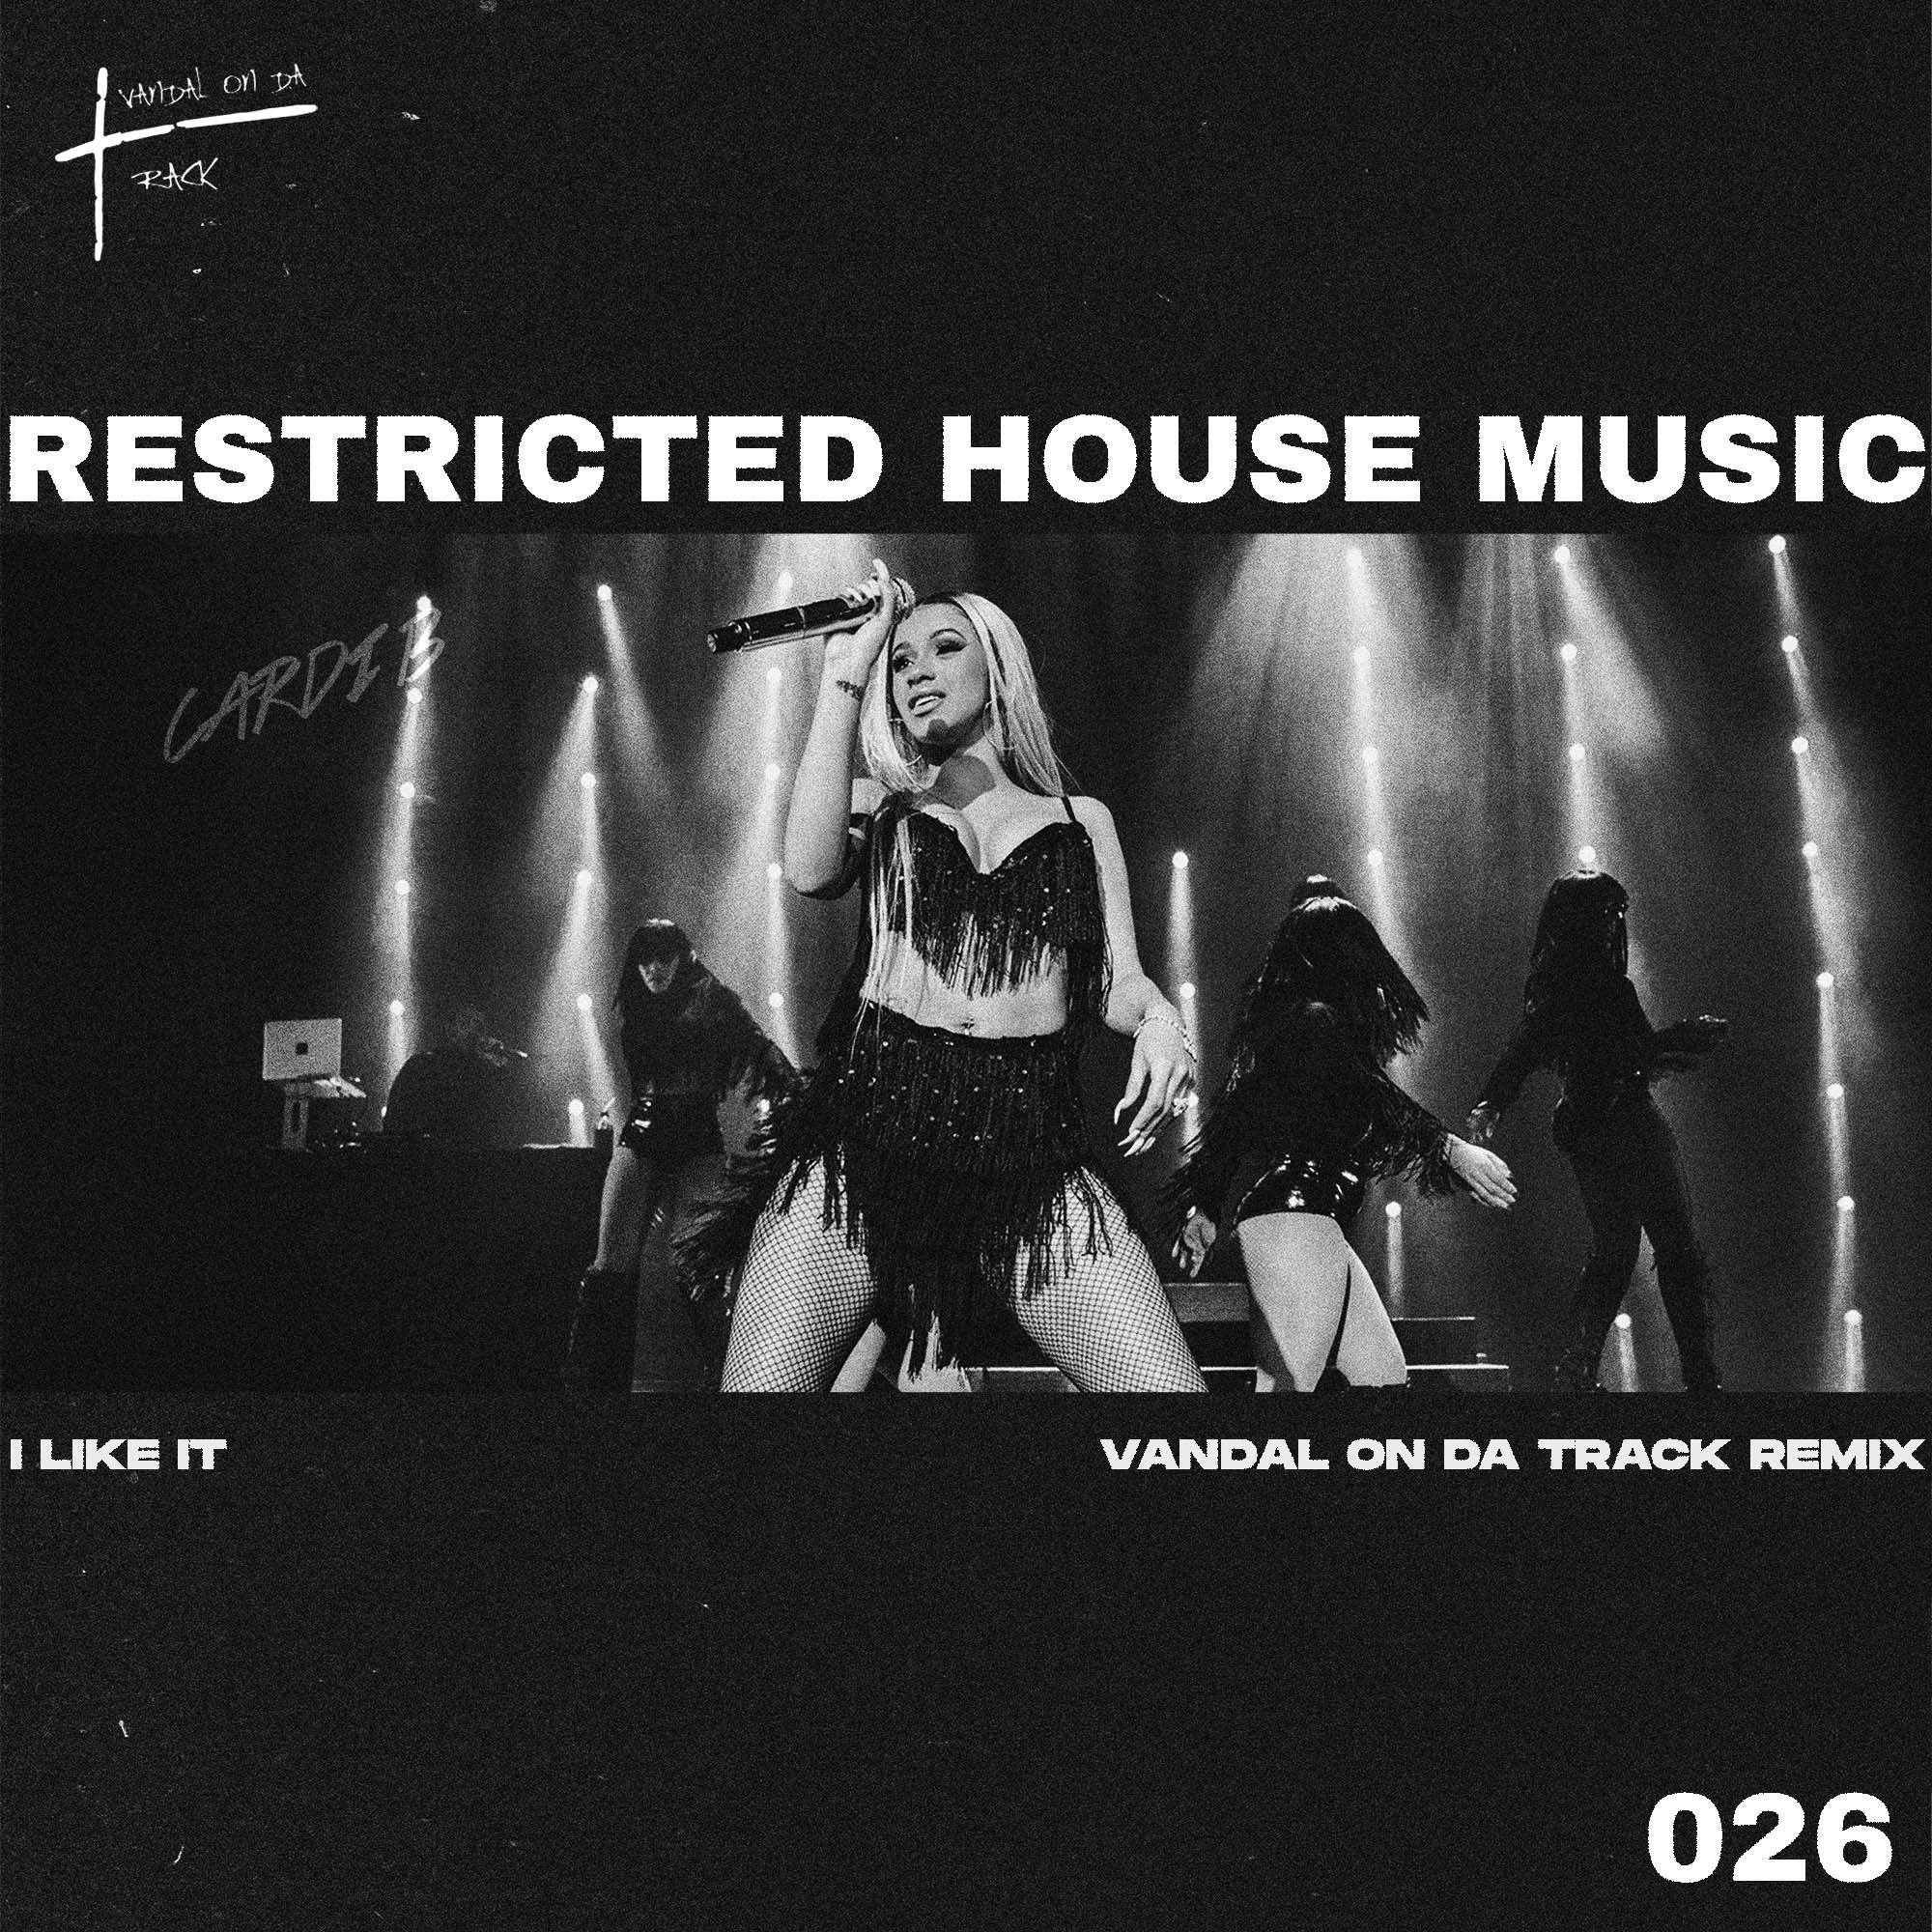 Descarregar Cardi B - I Like It (Vandal On Da Track & Ravage Remix) (Restricted House Music 026) FREE DL